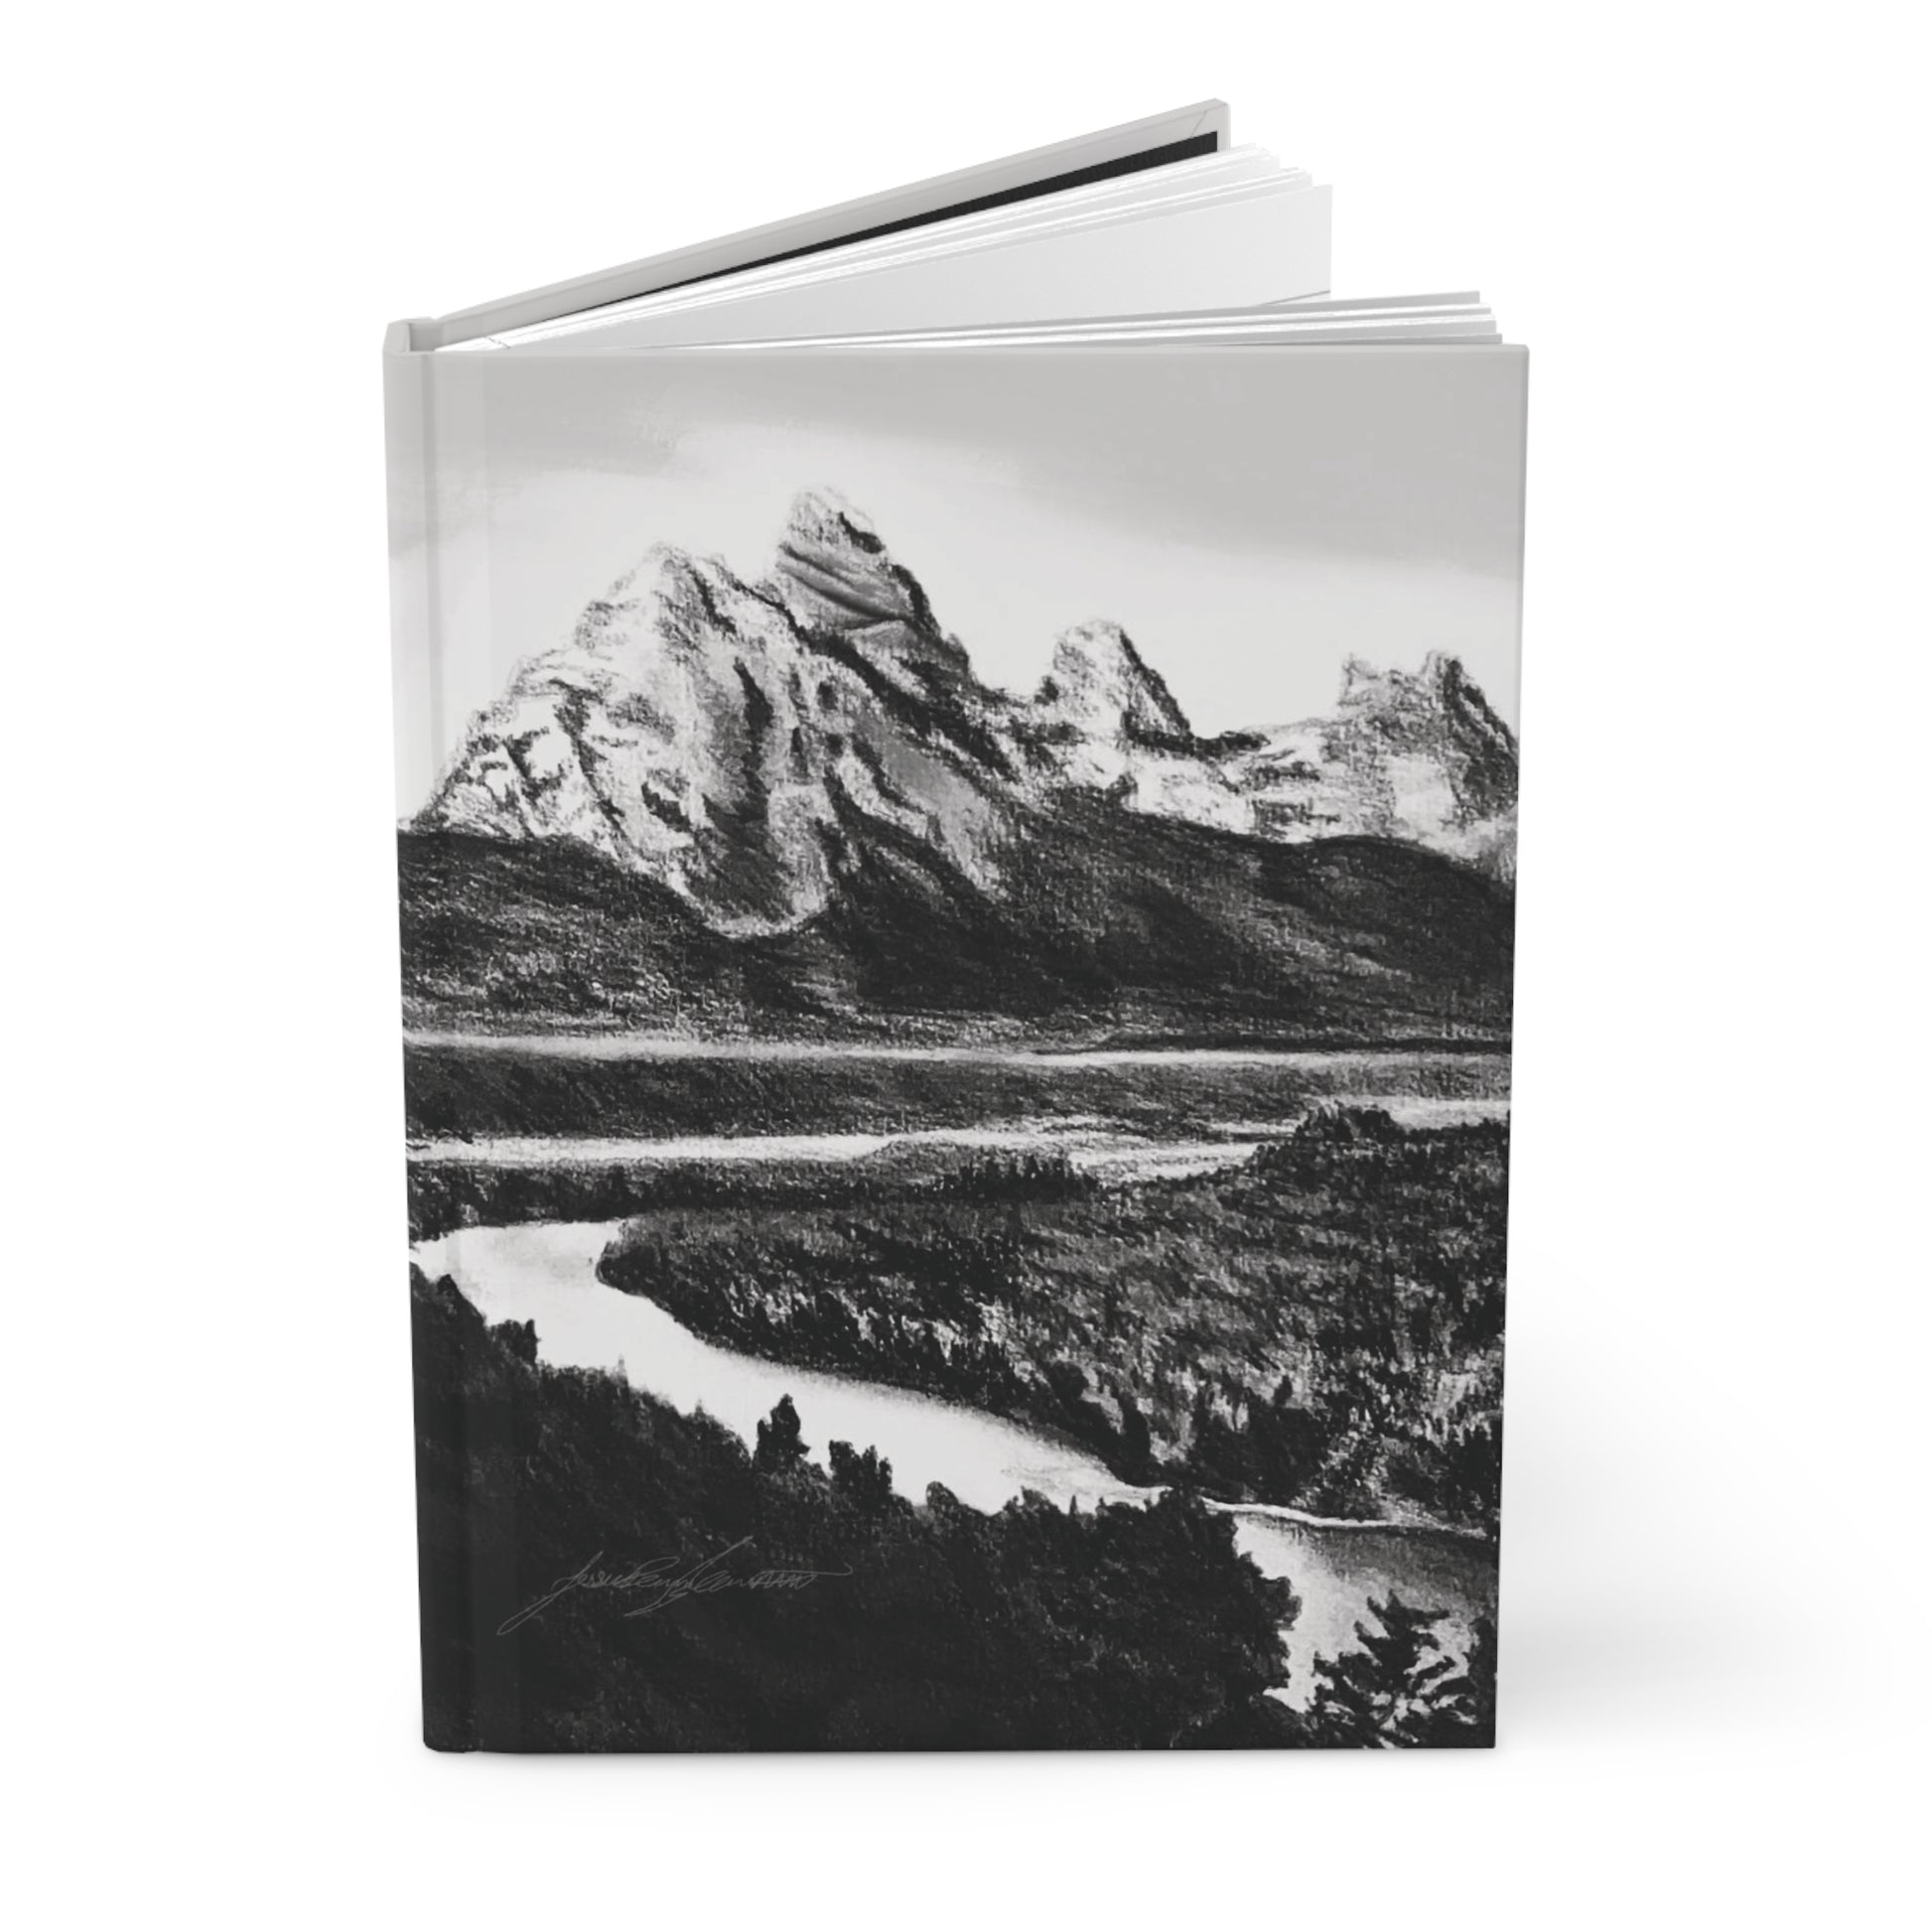 Mountain Journal